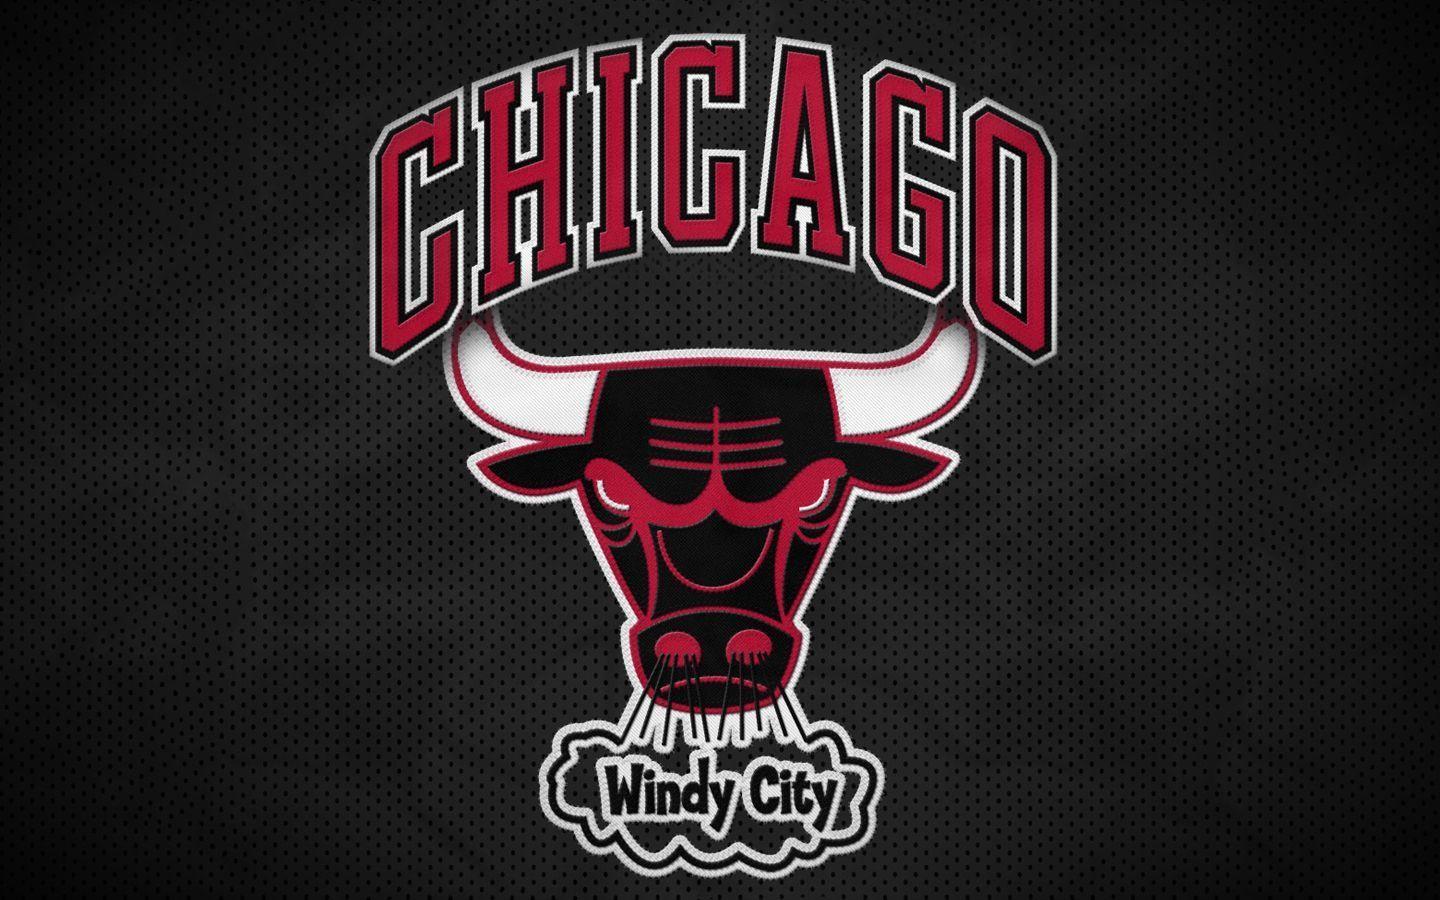 Chicago Bulls 79 97326 Image HD Wallpaper. Wallfoy.com